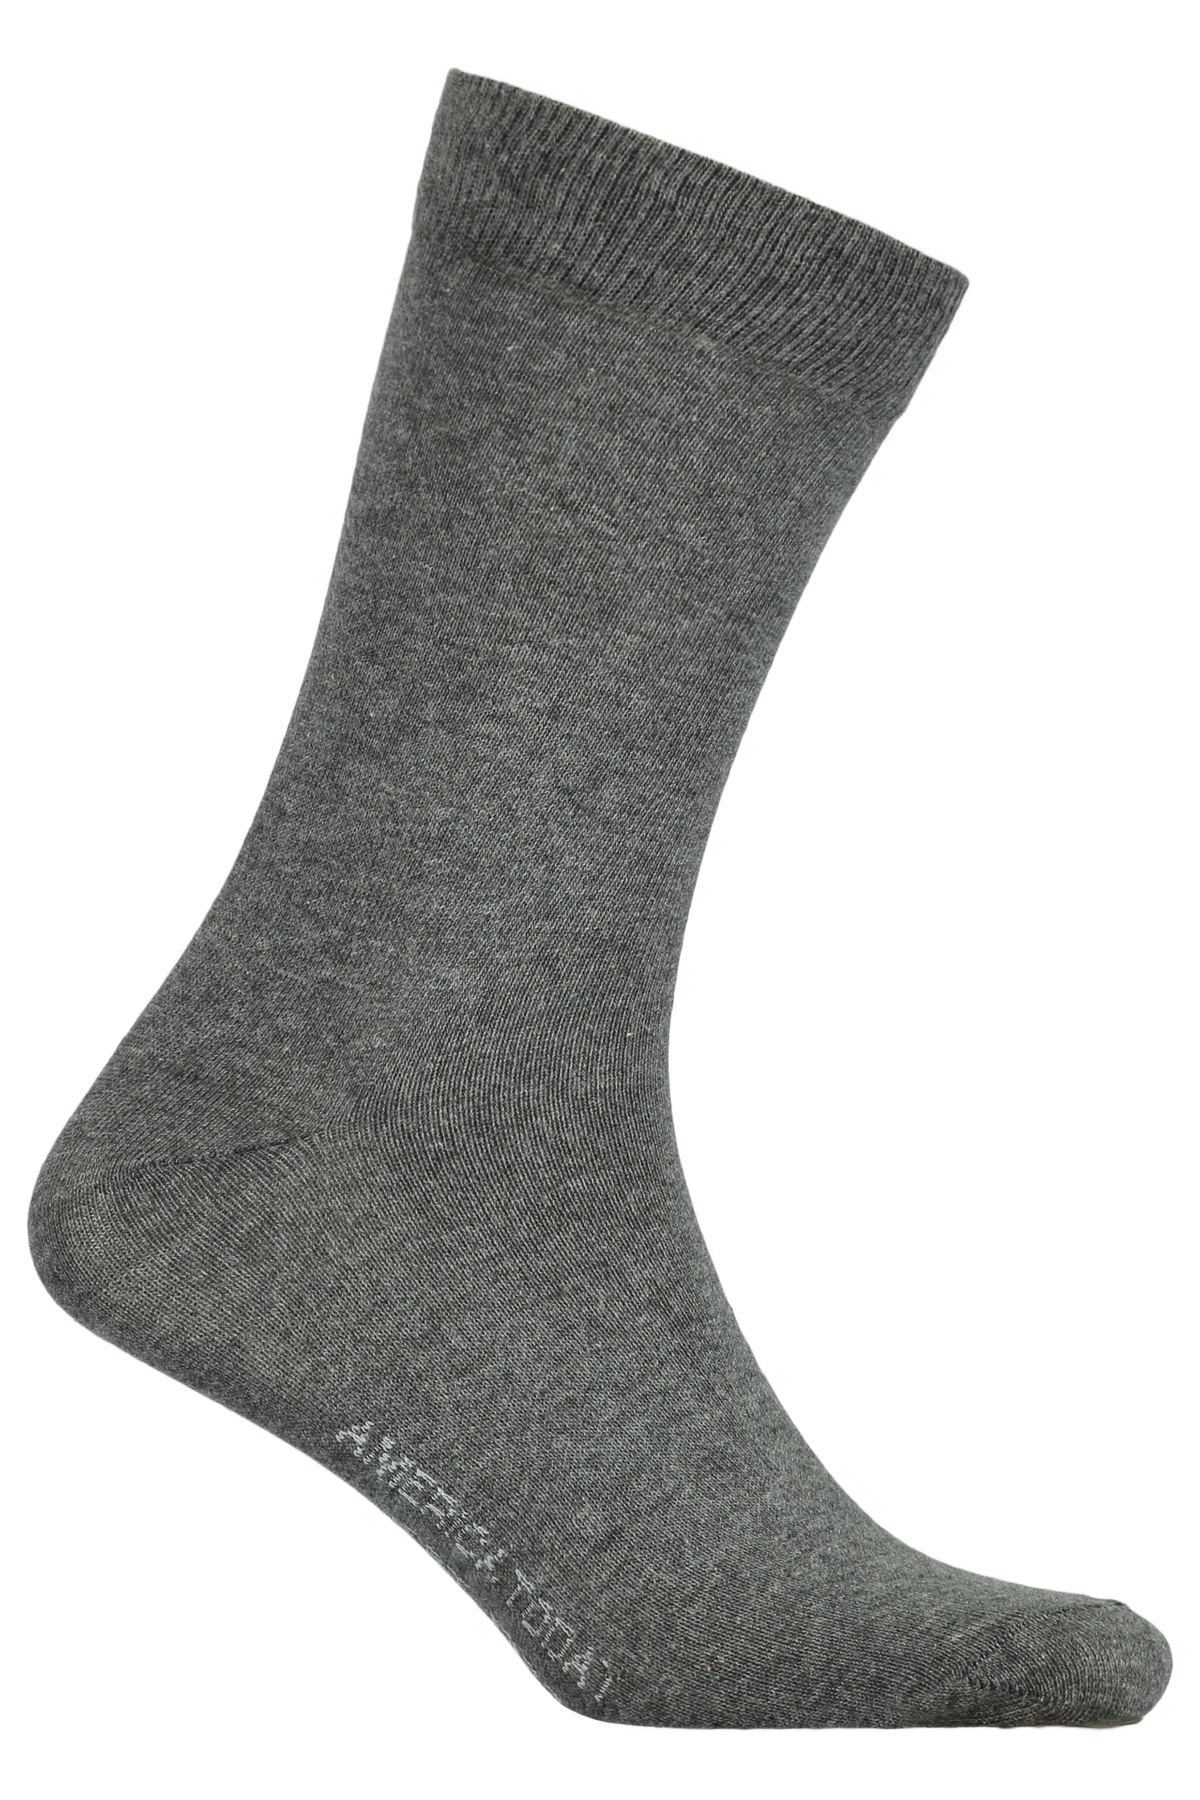 Chausettes Uni socks